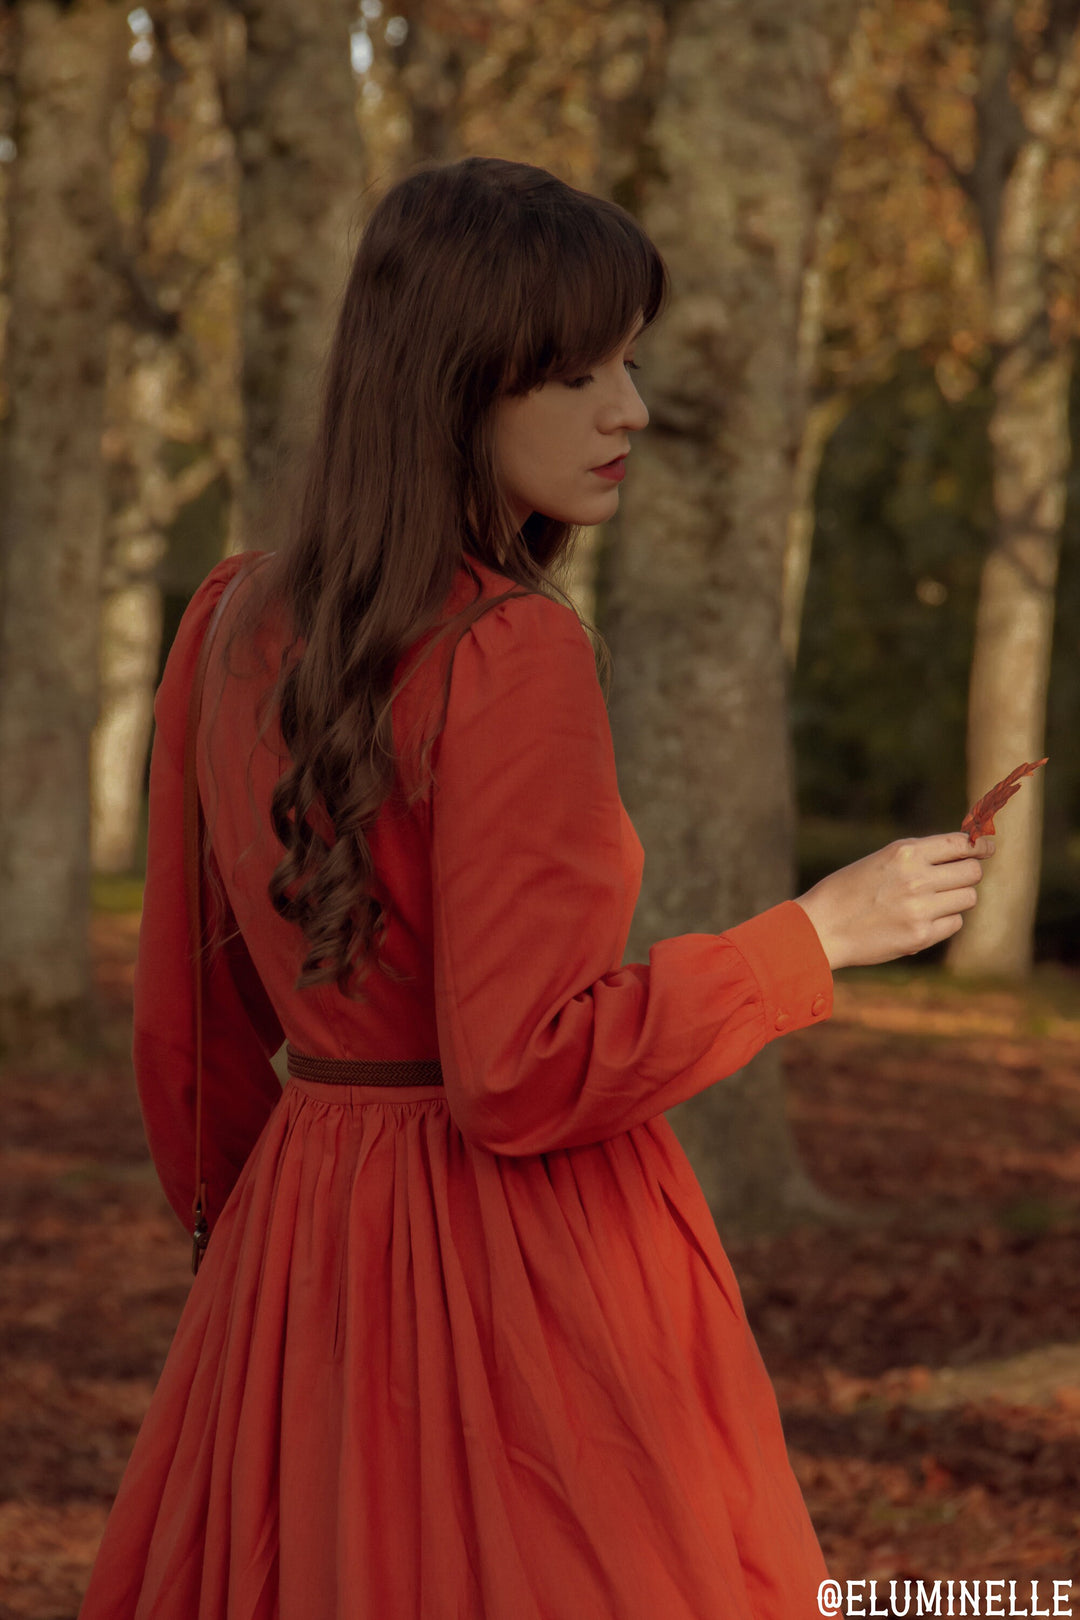 MTO - Agnes Dress in Redwood Linen